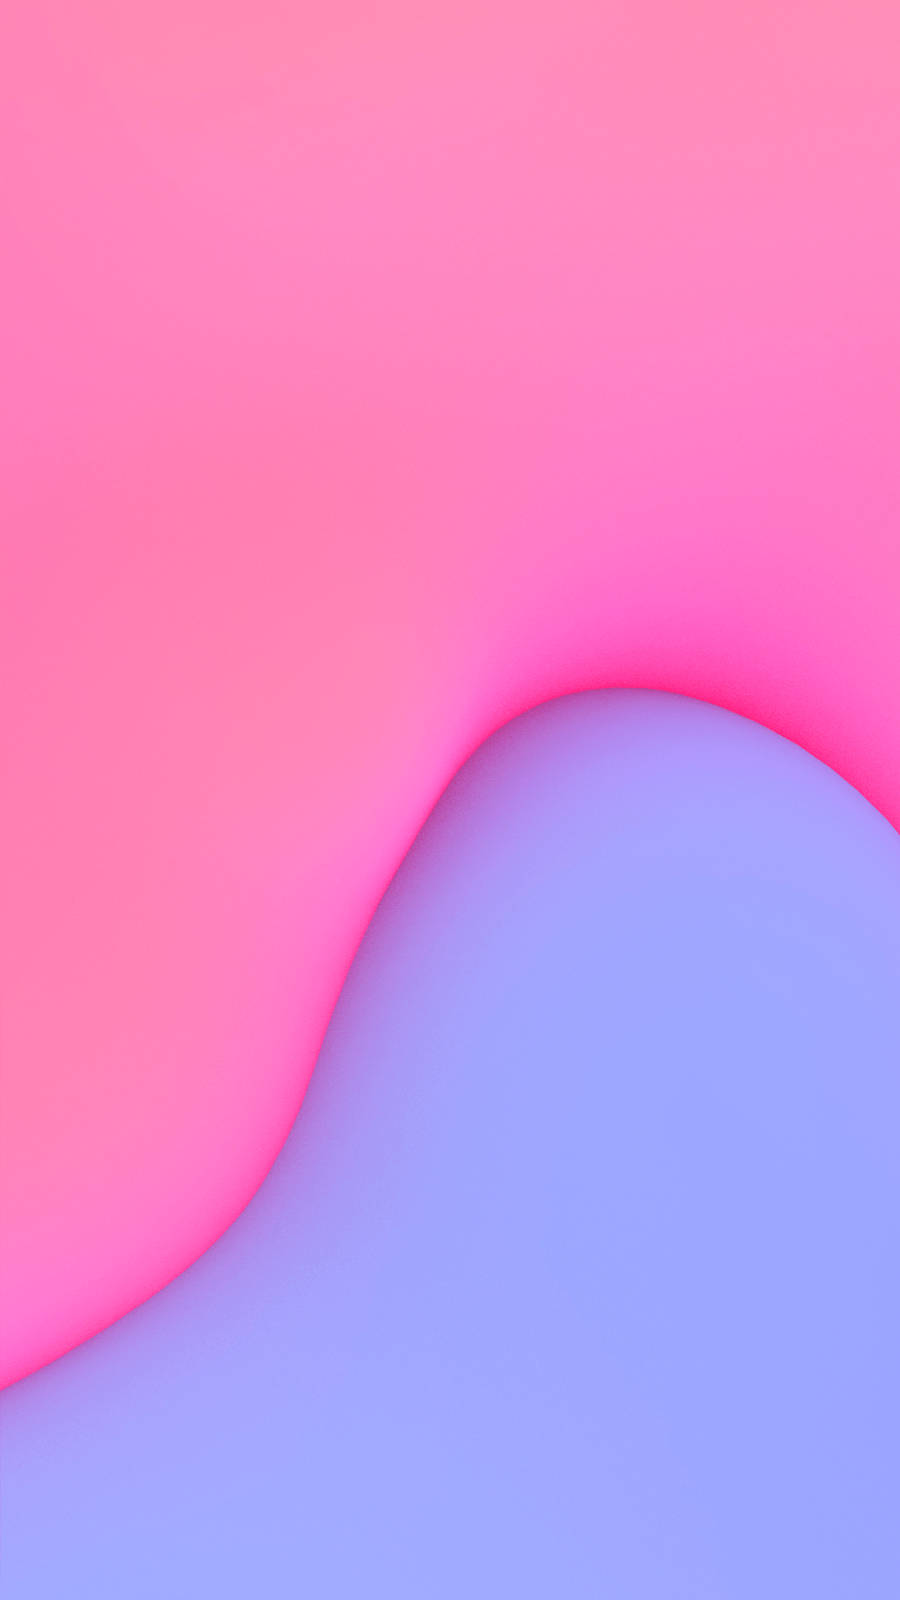 Pixel 3 XL Pink And Purple Wallpaper